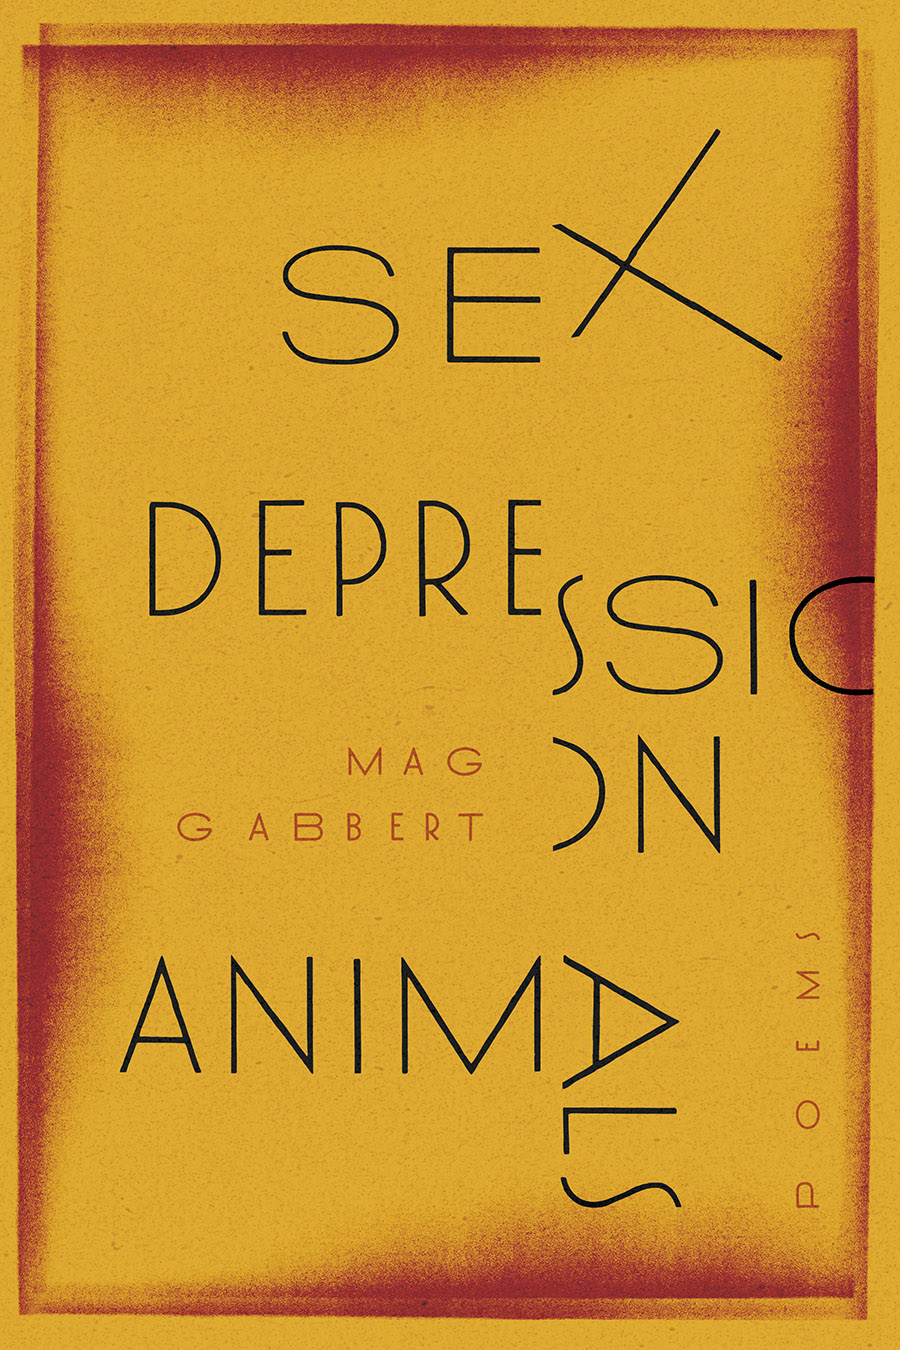 Sex Depression Animals book cover